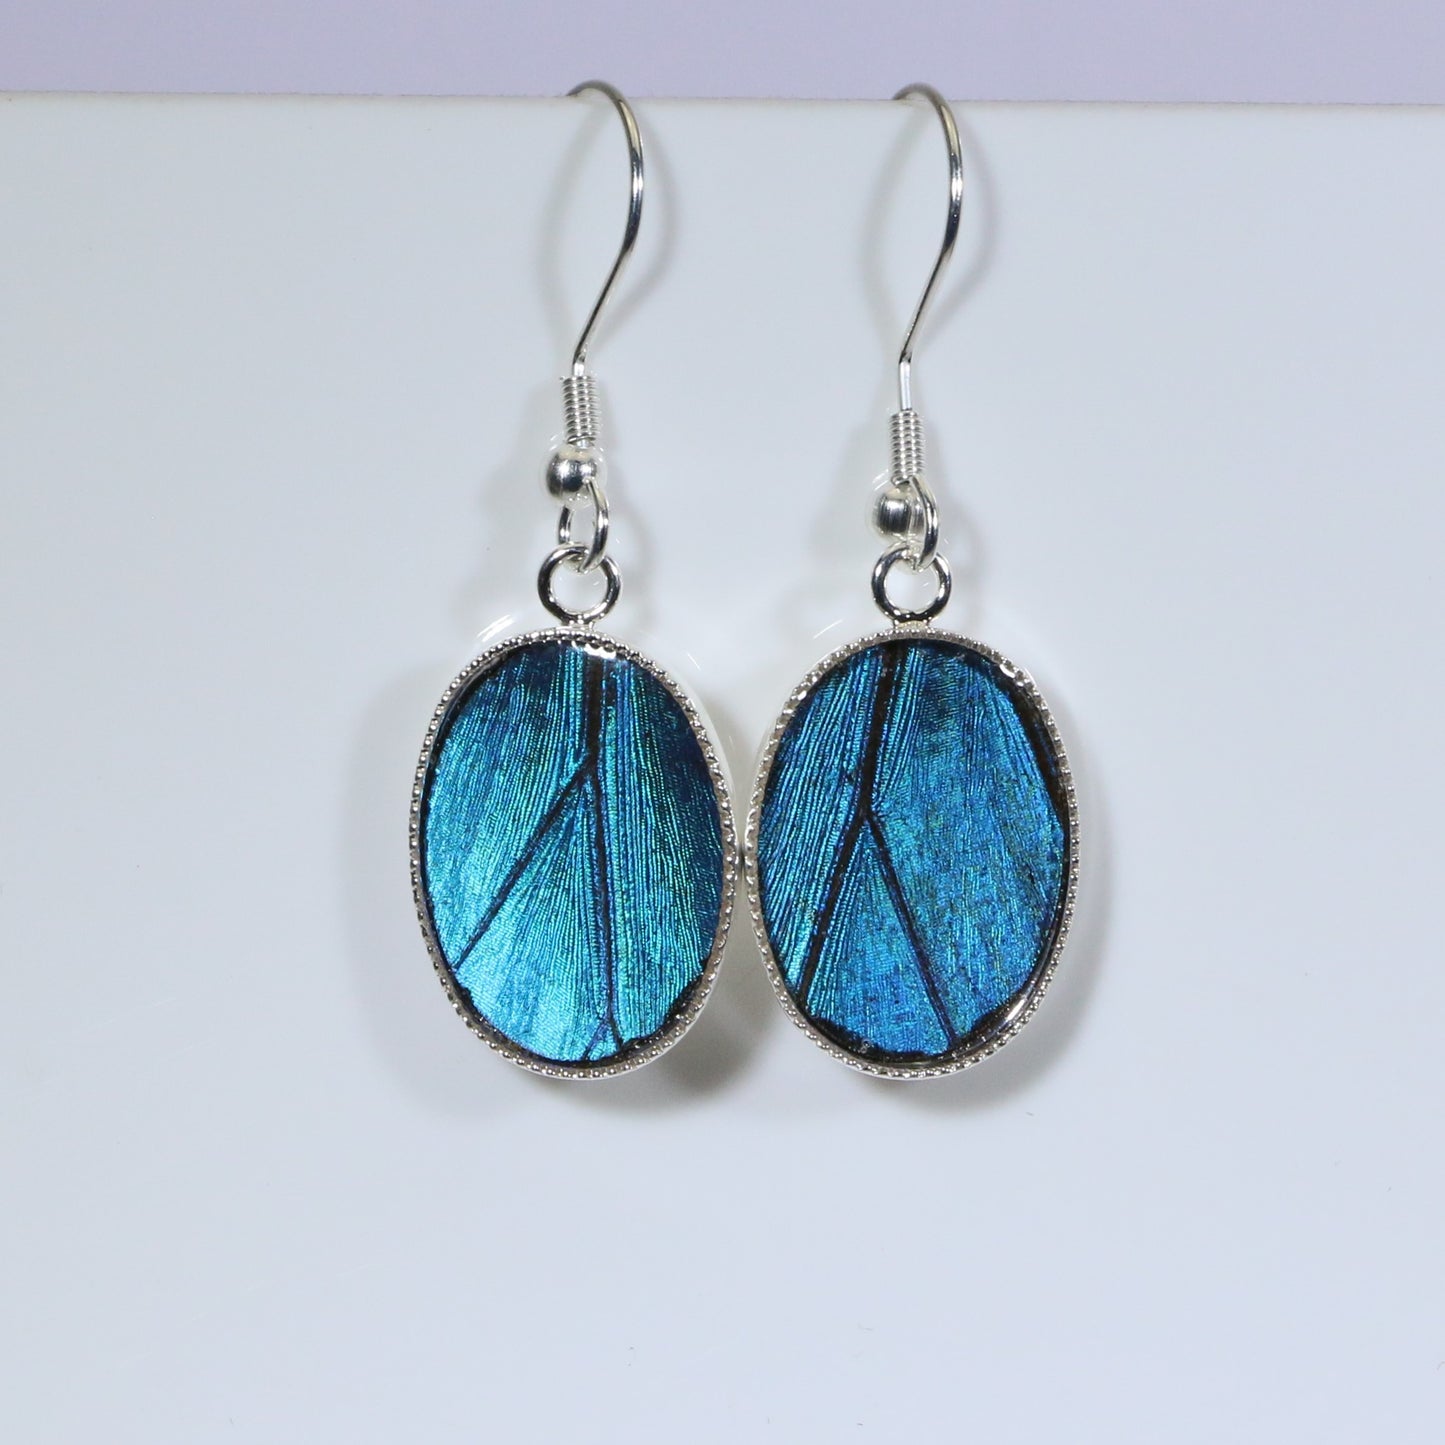 51101 - Real Butterfly Wing Jewelry - Earrings - Small - Blue Morpho